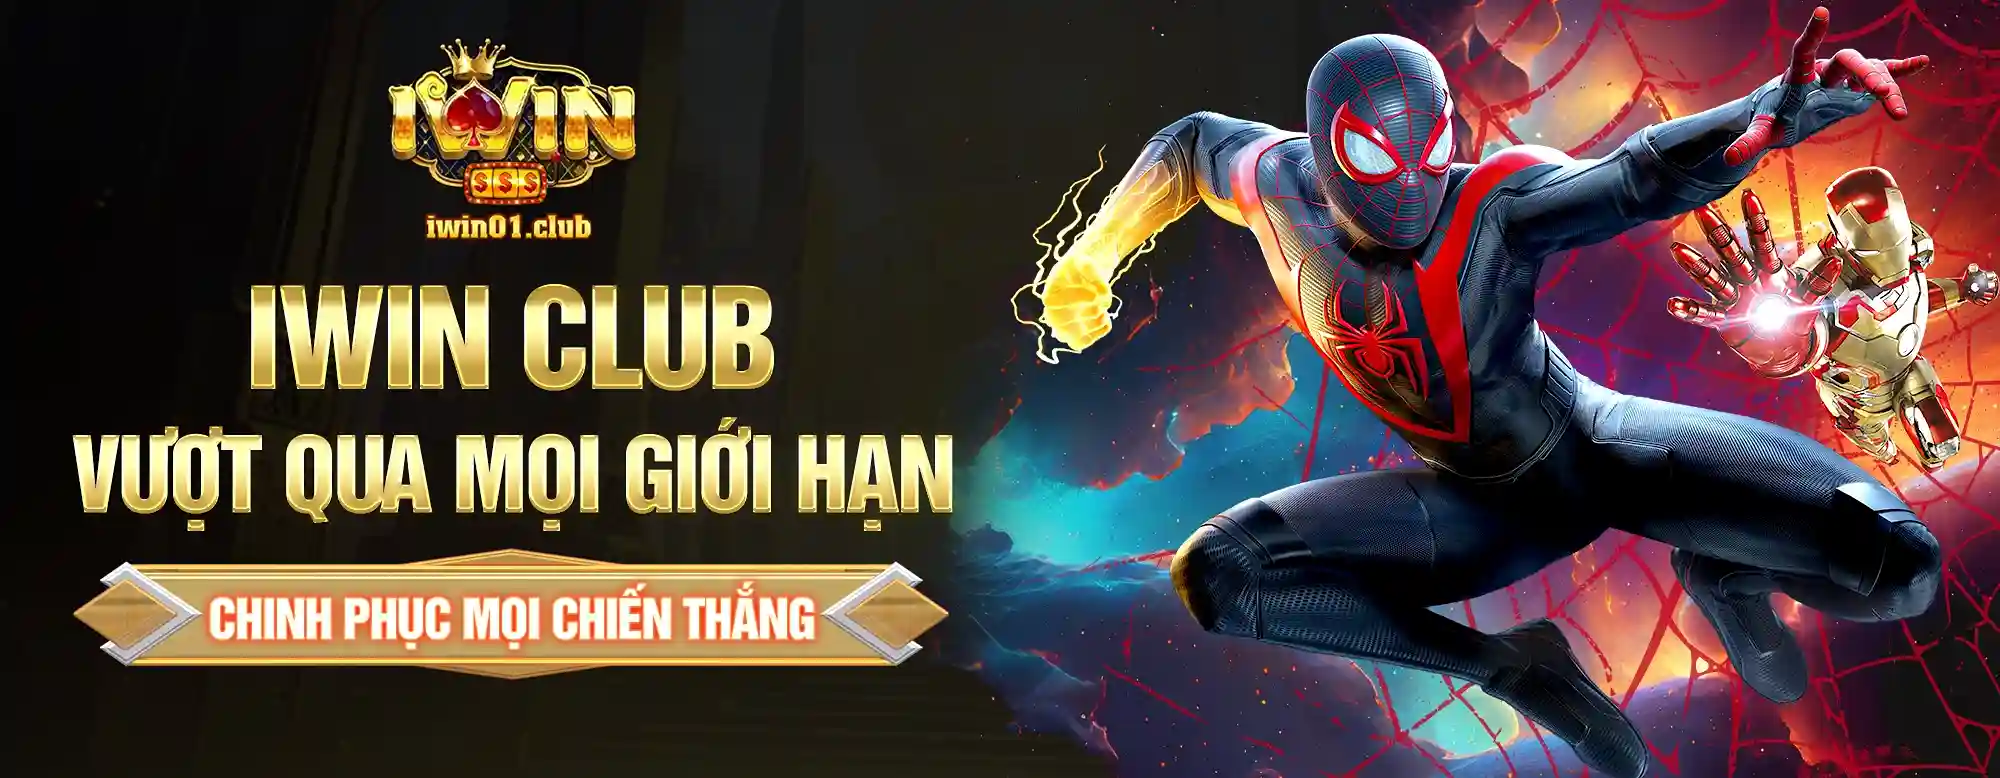 banner iWin Club 2